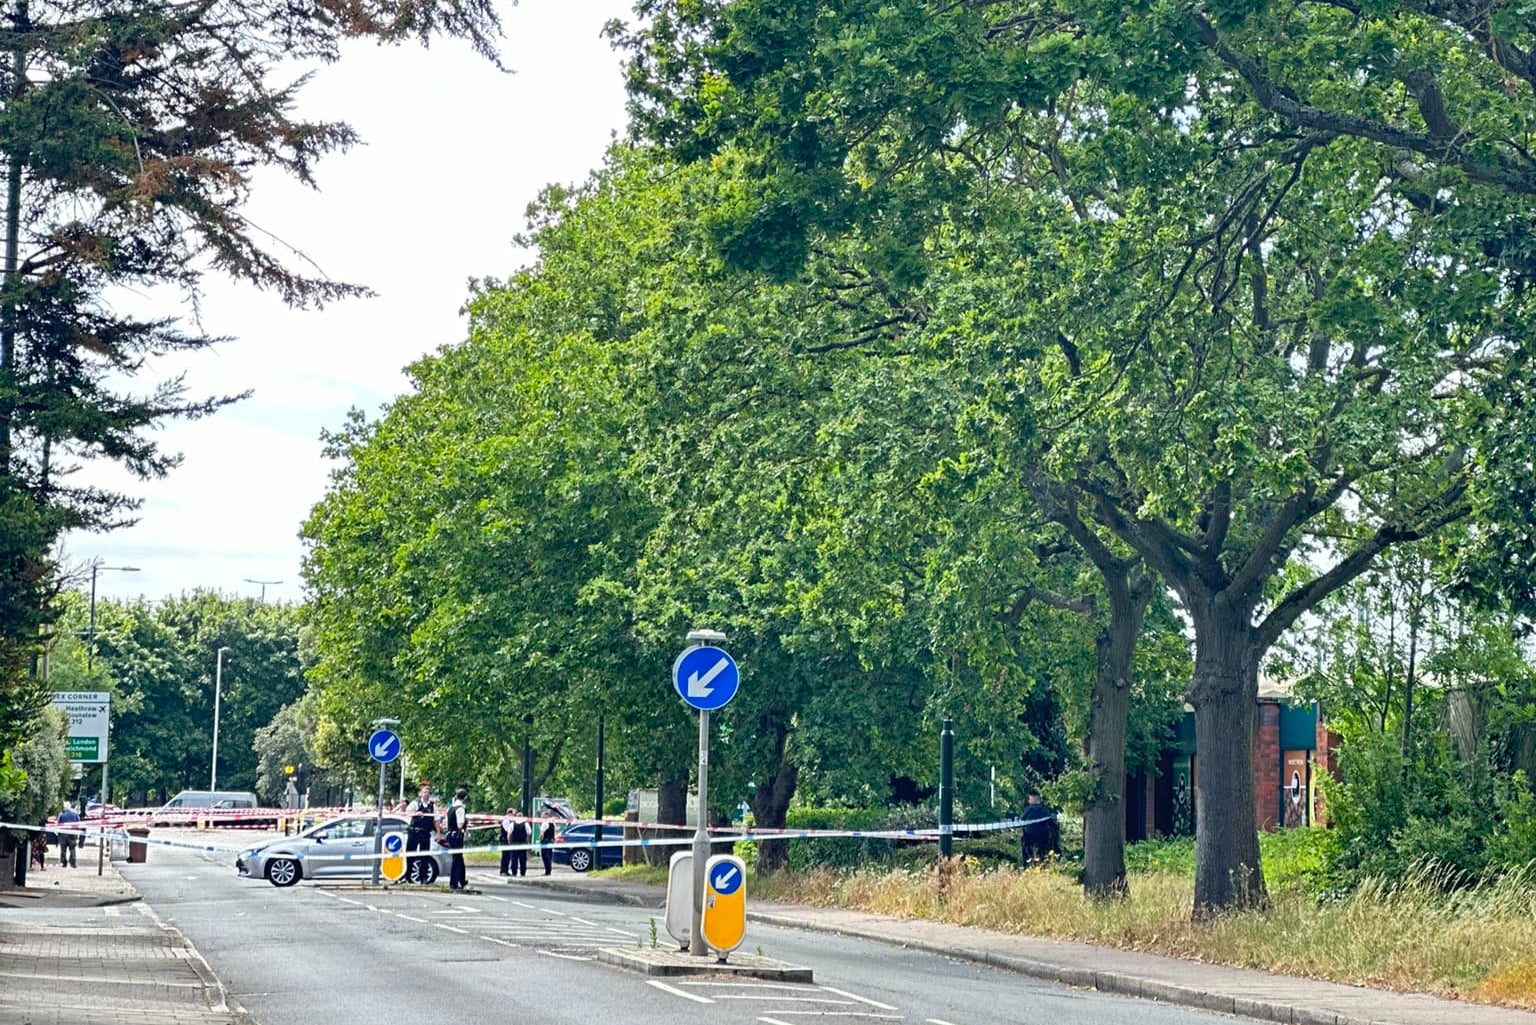 The crime scene in Feltham, west London